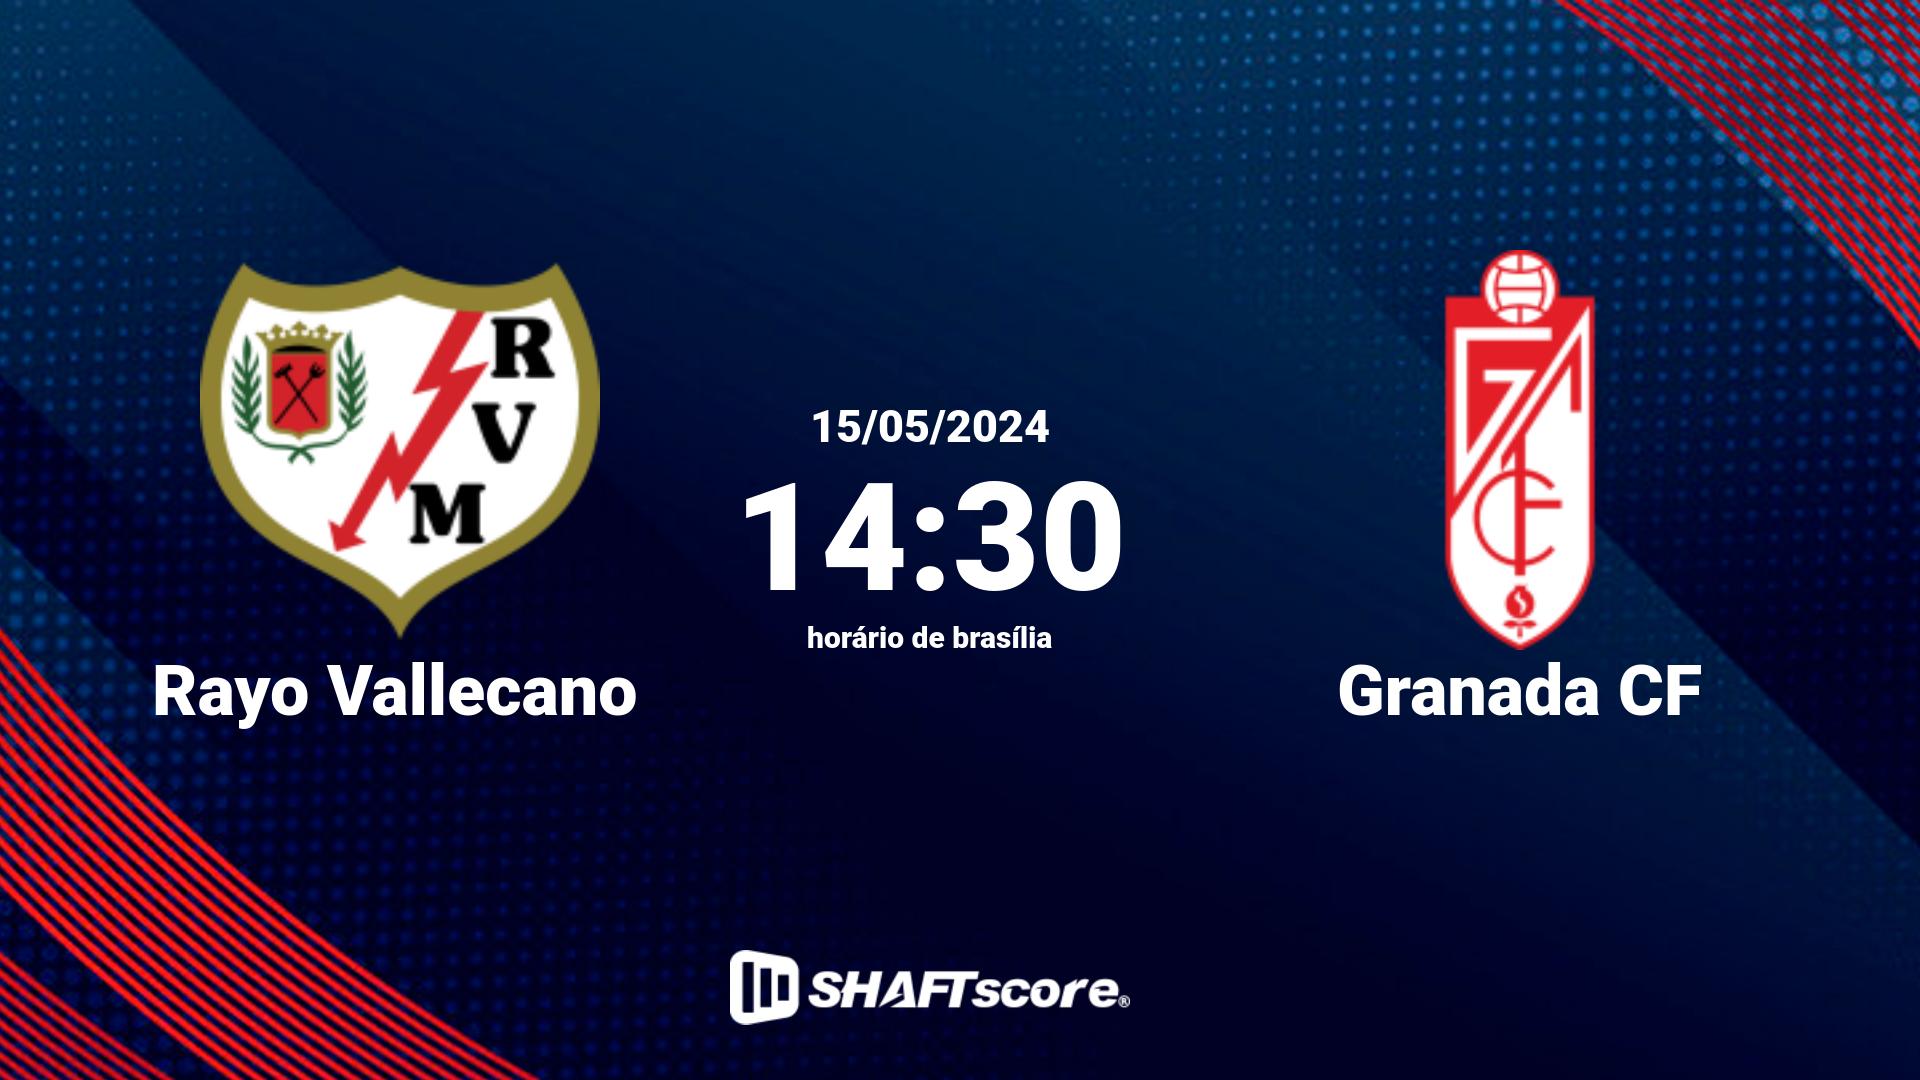 Estatísticas do jogo Rayo Vallecano vs Granada CF 15.05 14:30